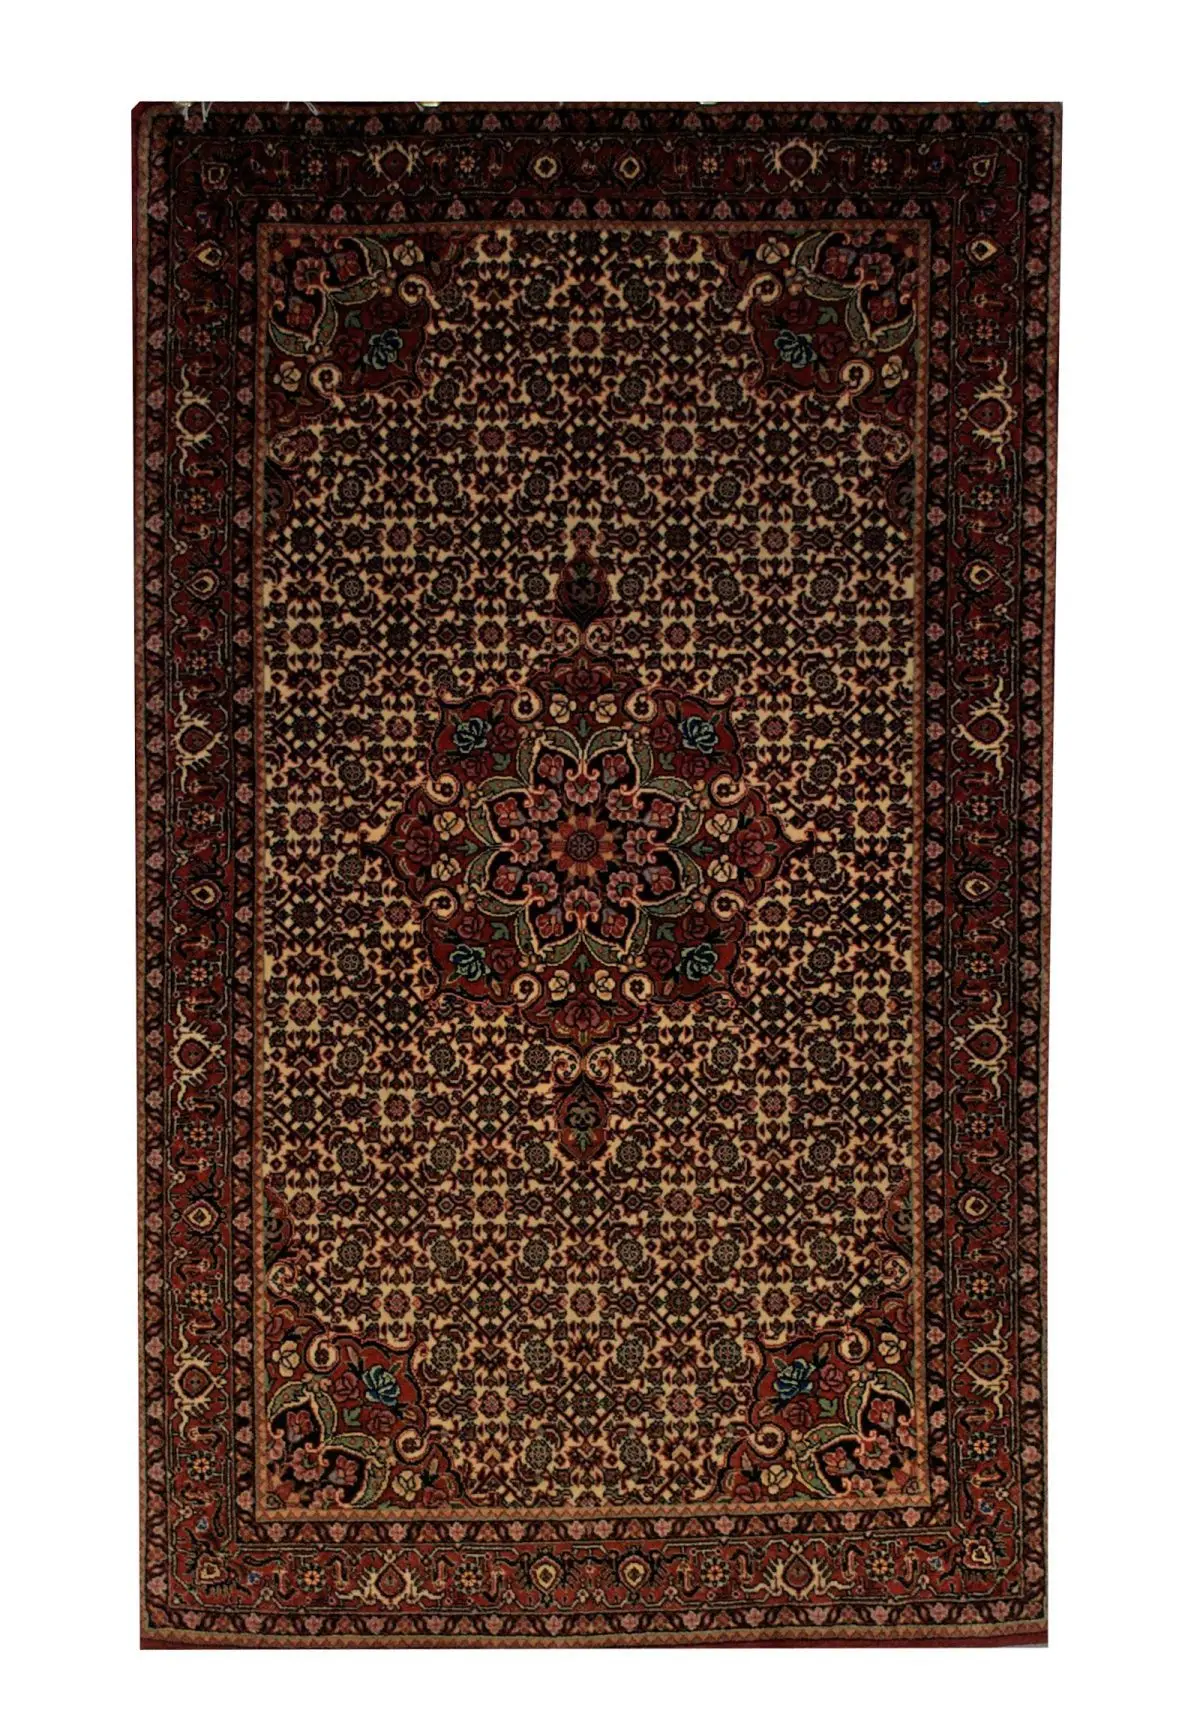 Persian Bijar rug 3' 1" x 5' 1" Handmade Area Rug - Shabahang Royal Carpet